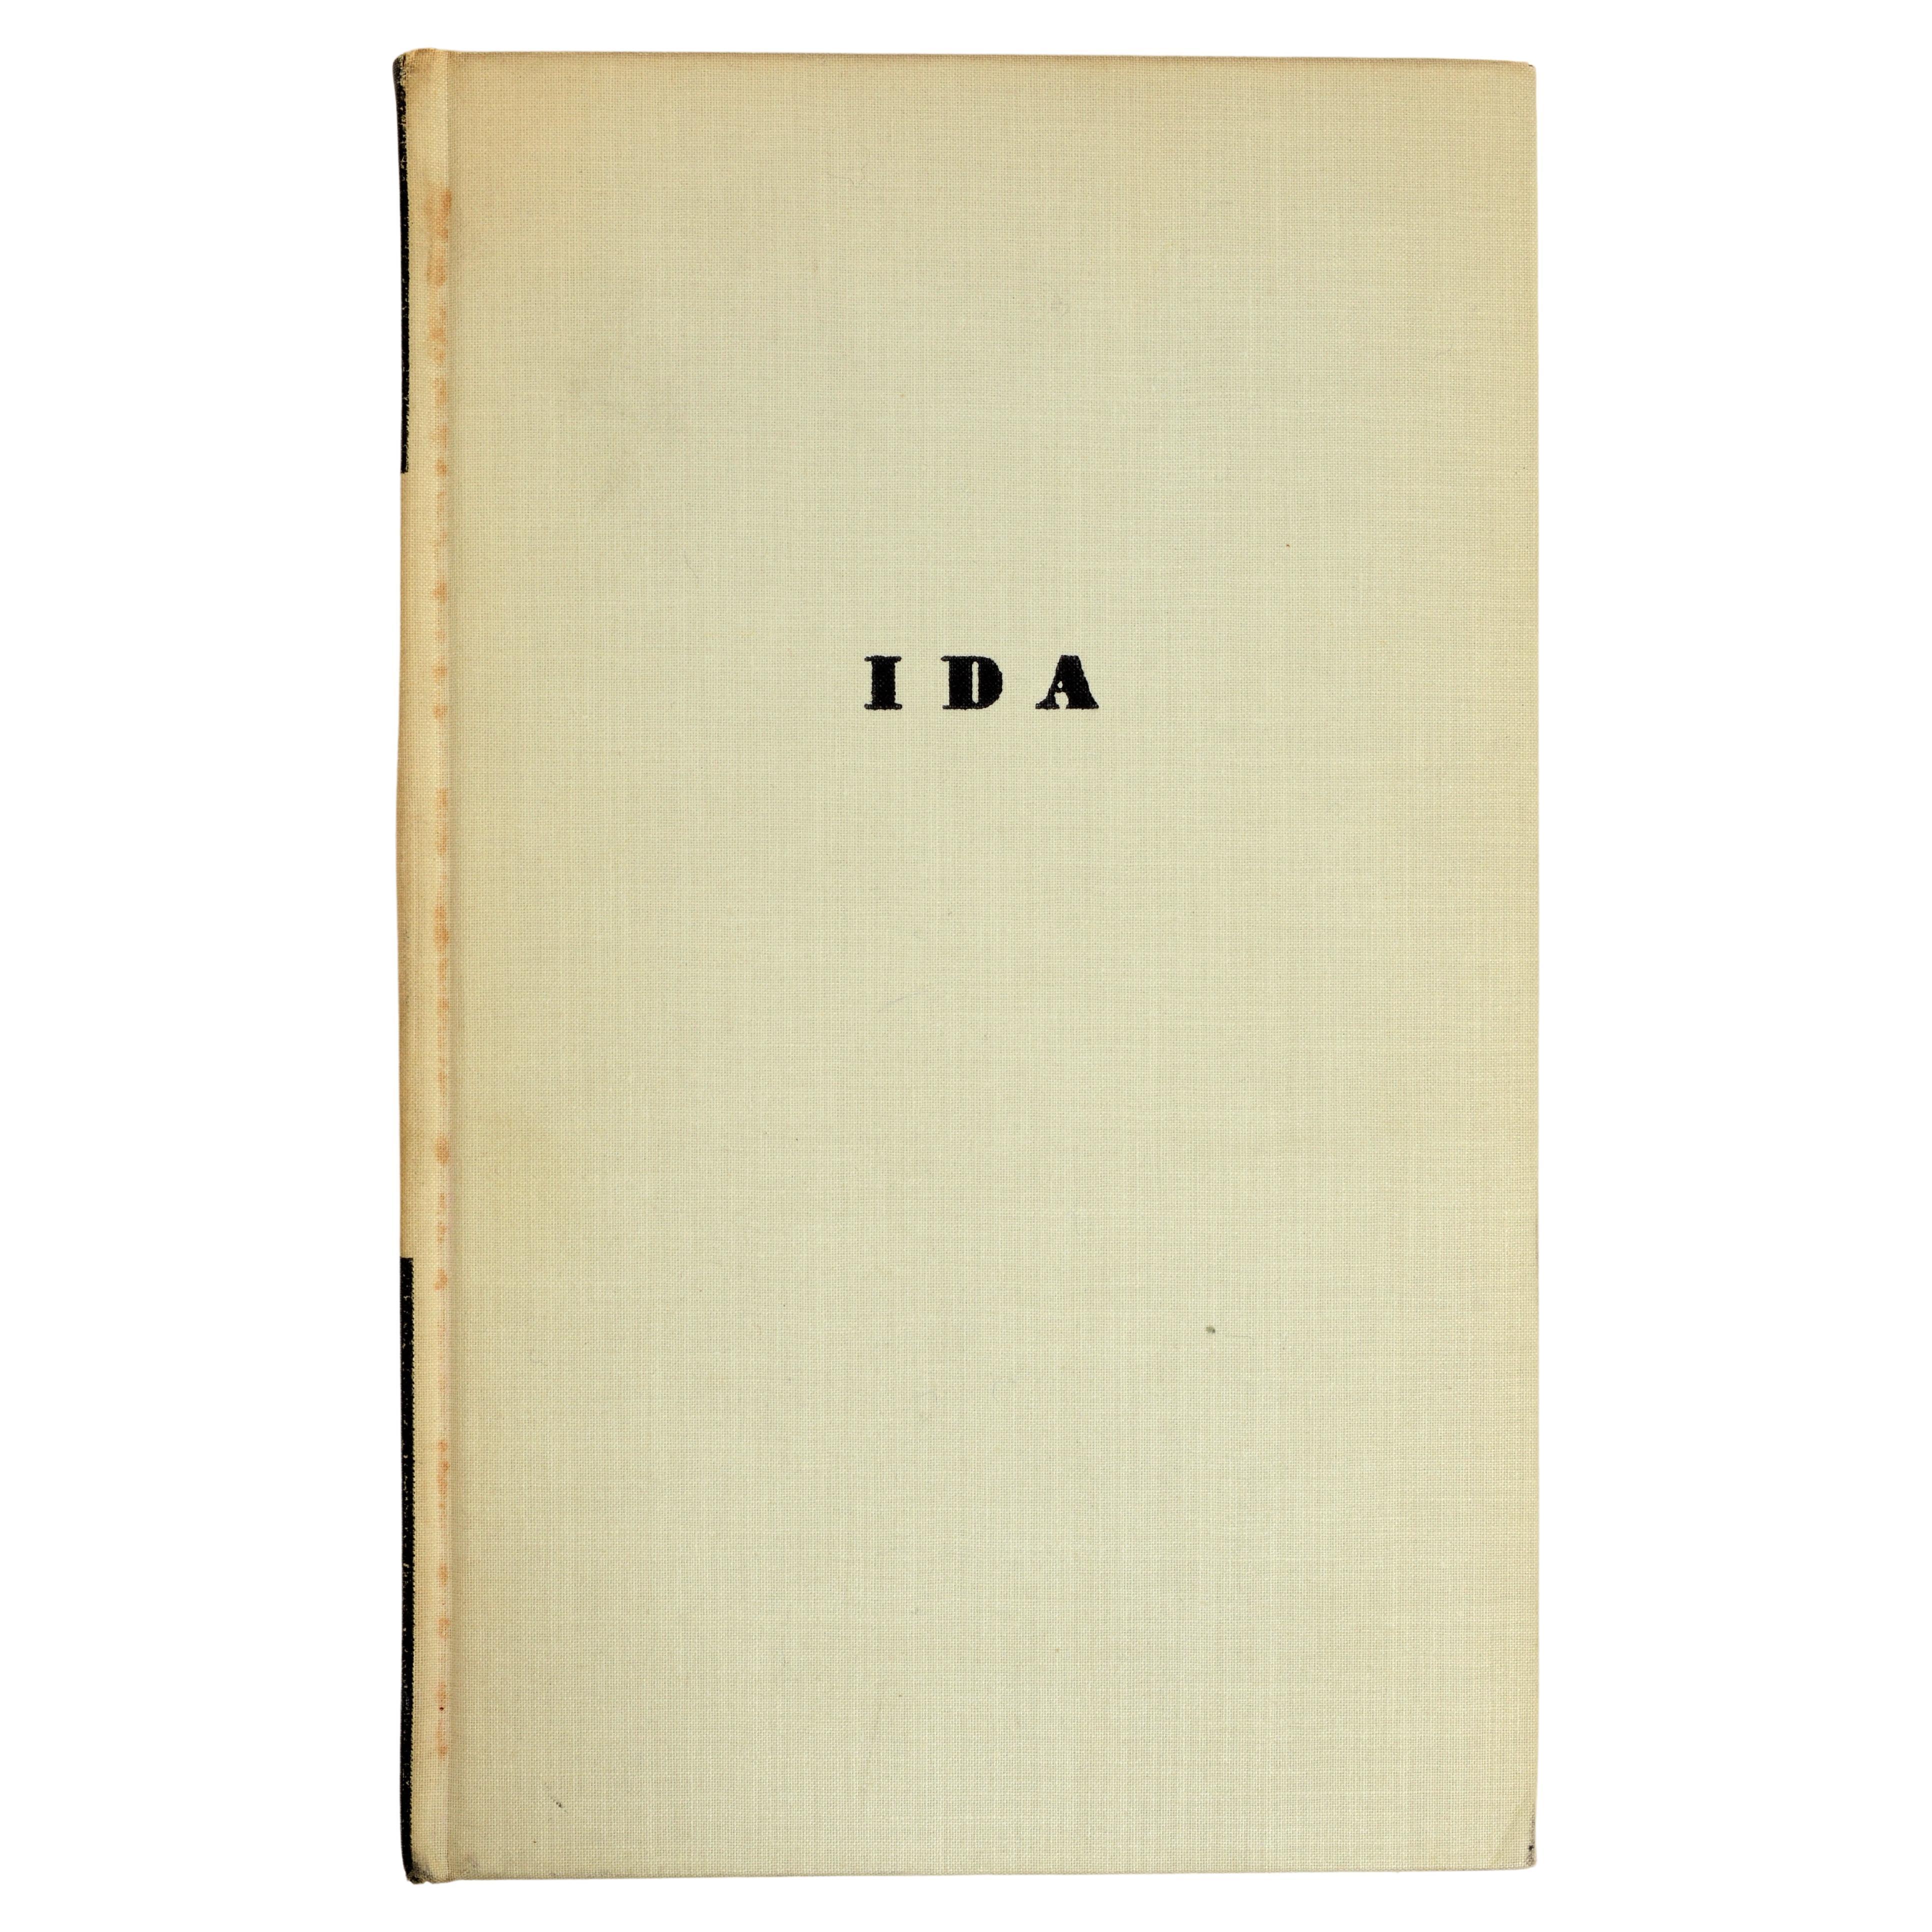 Ida, une nouvelle de Gertrude Stein, Stated 1st Ed